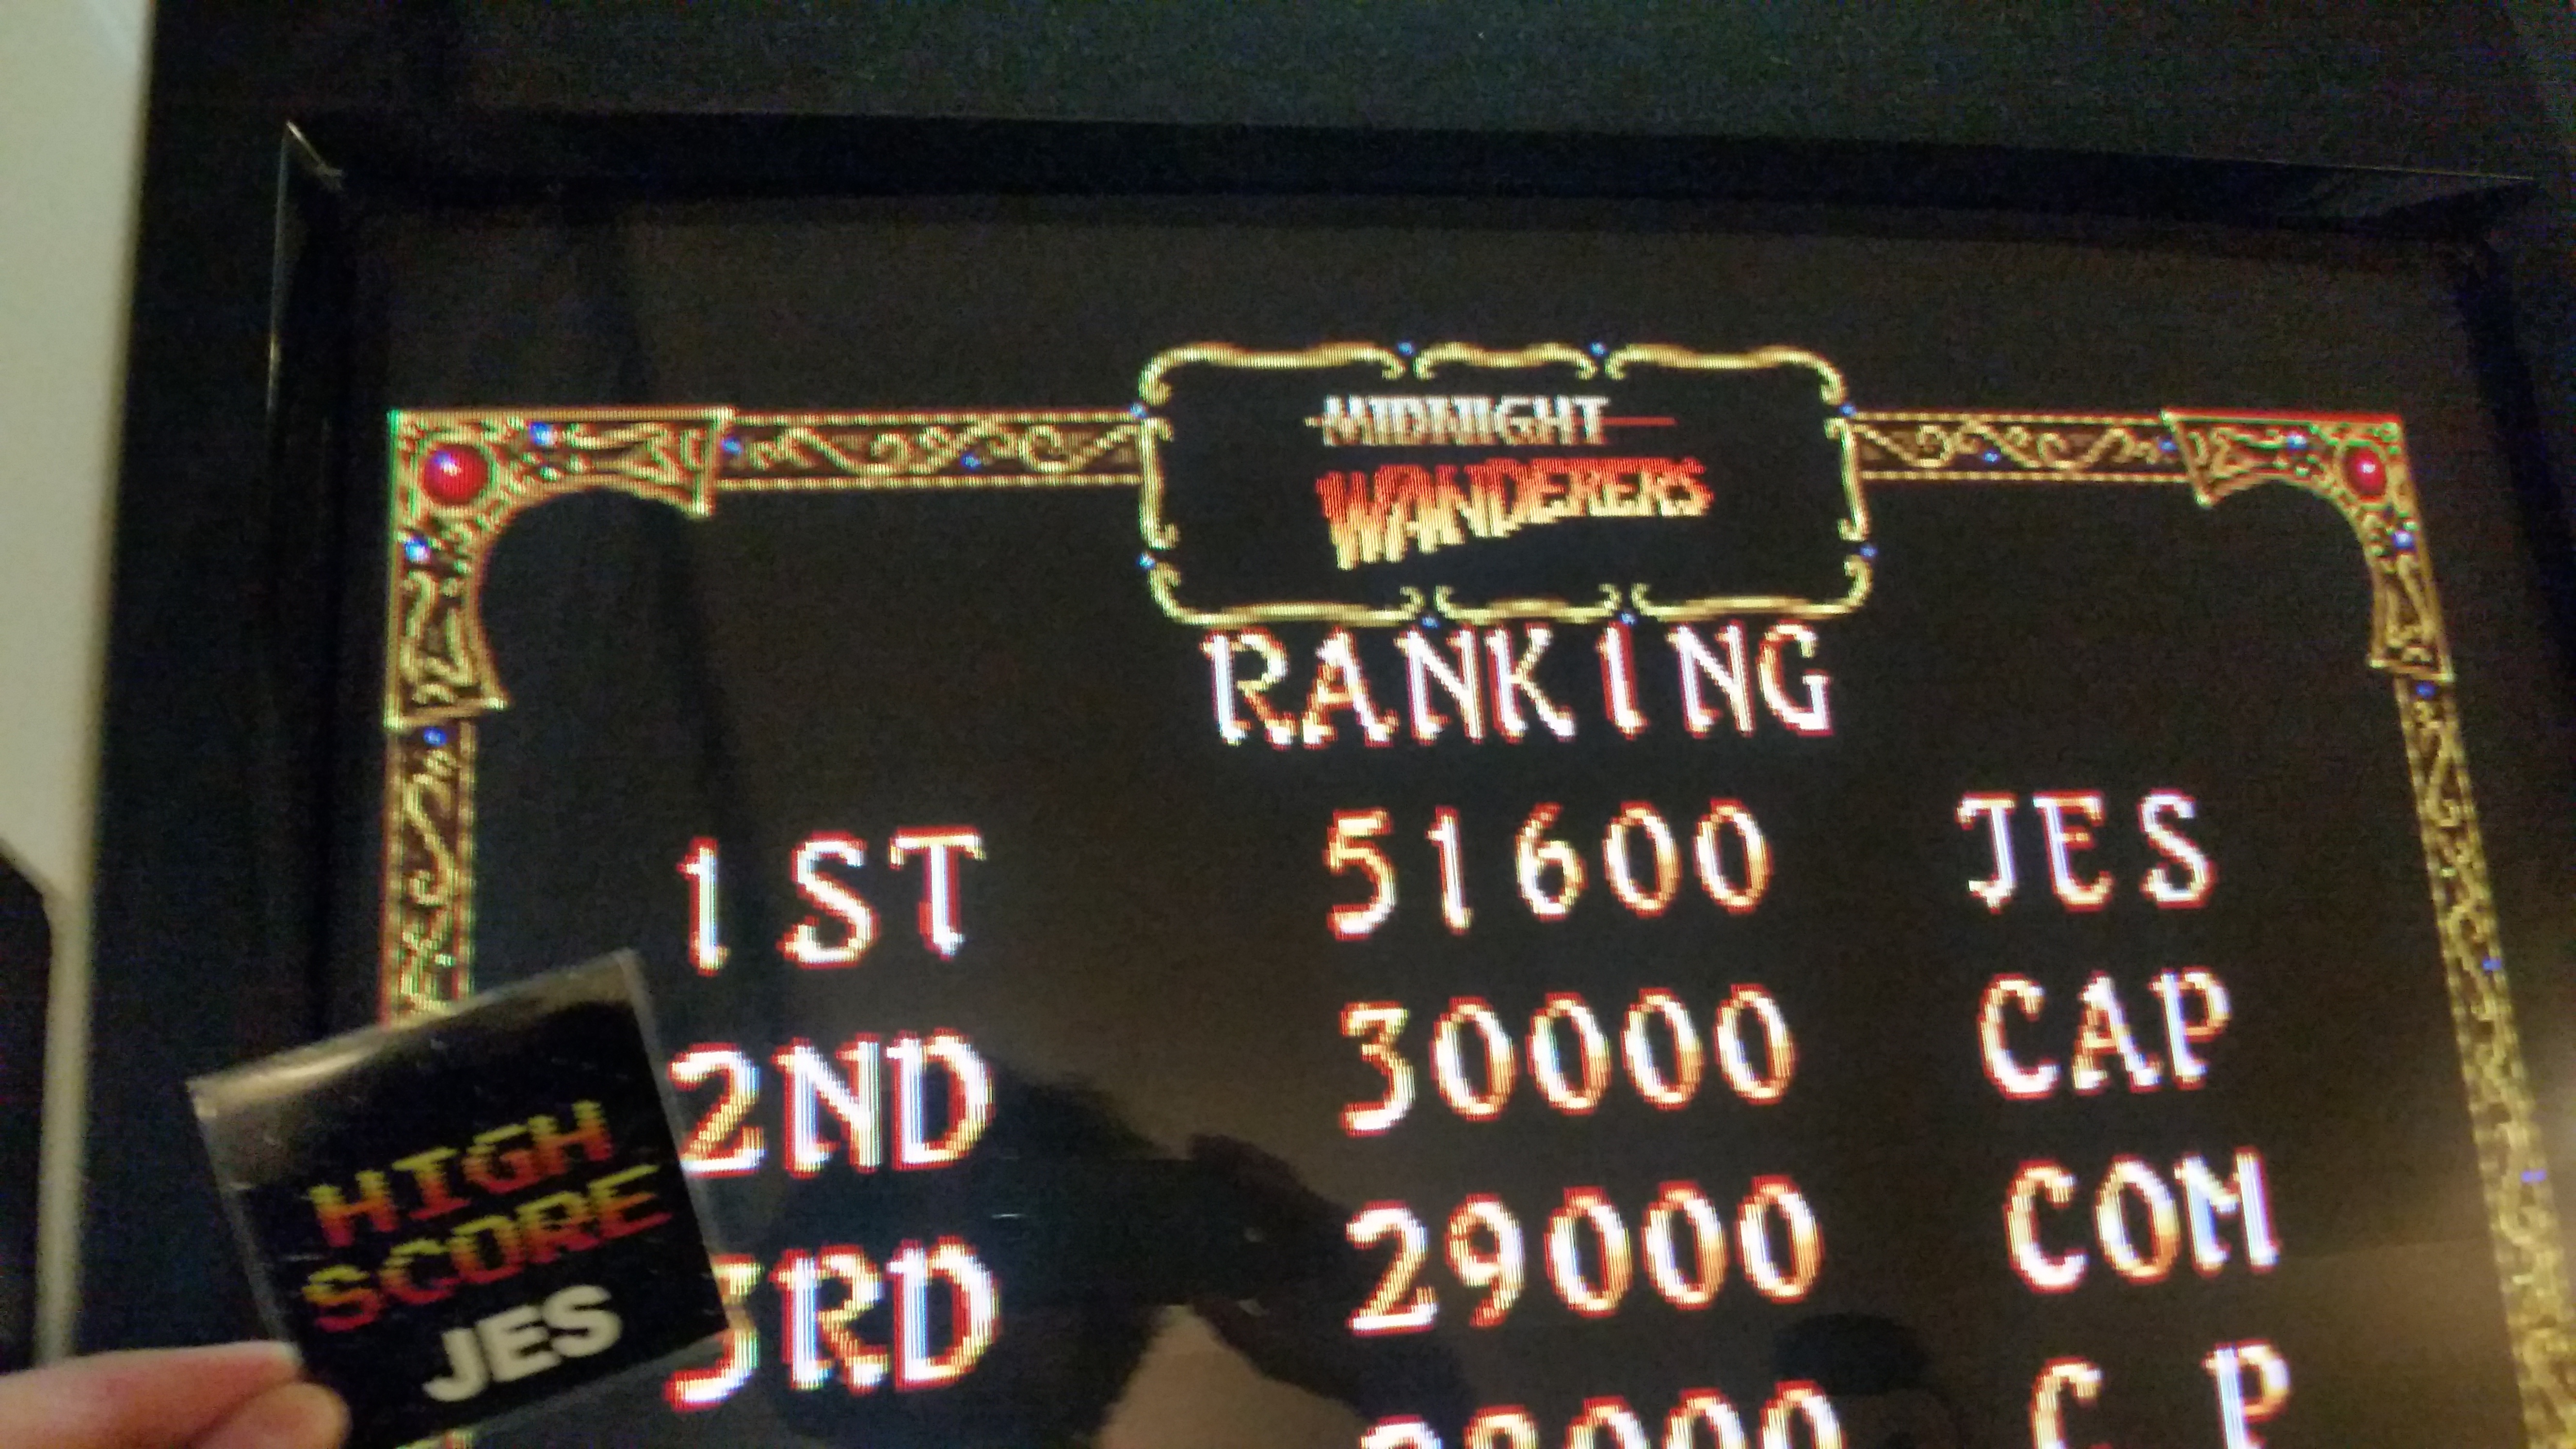 Three Wonders: Midnight Wanderers [3wonders] 51,600 points